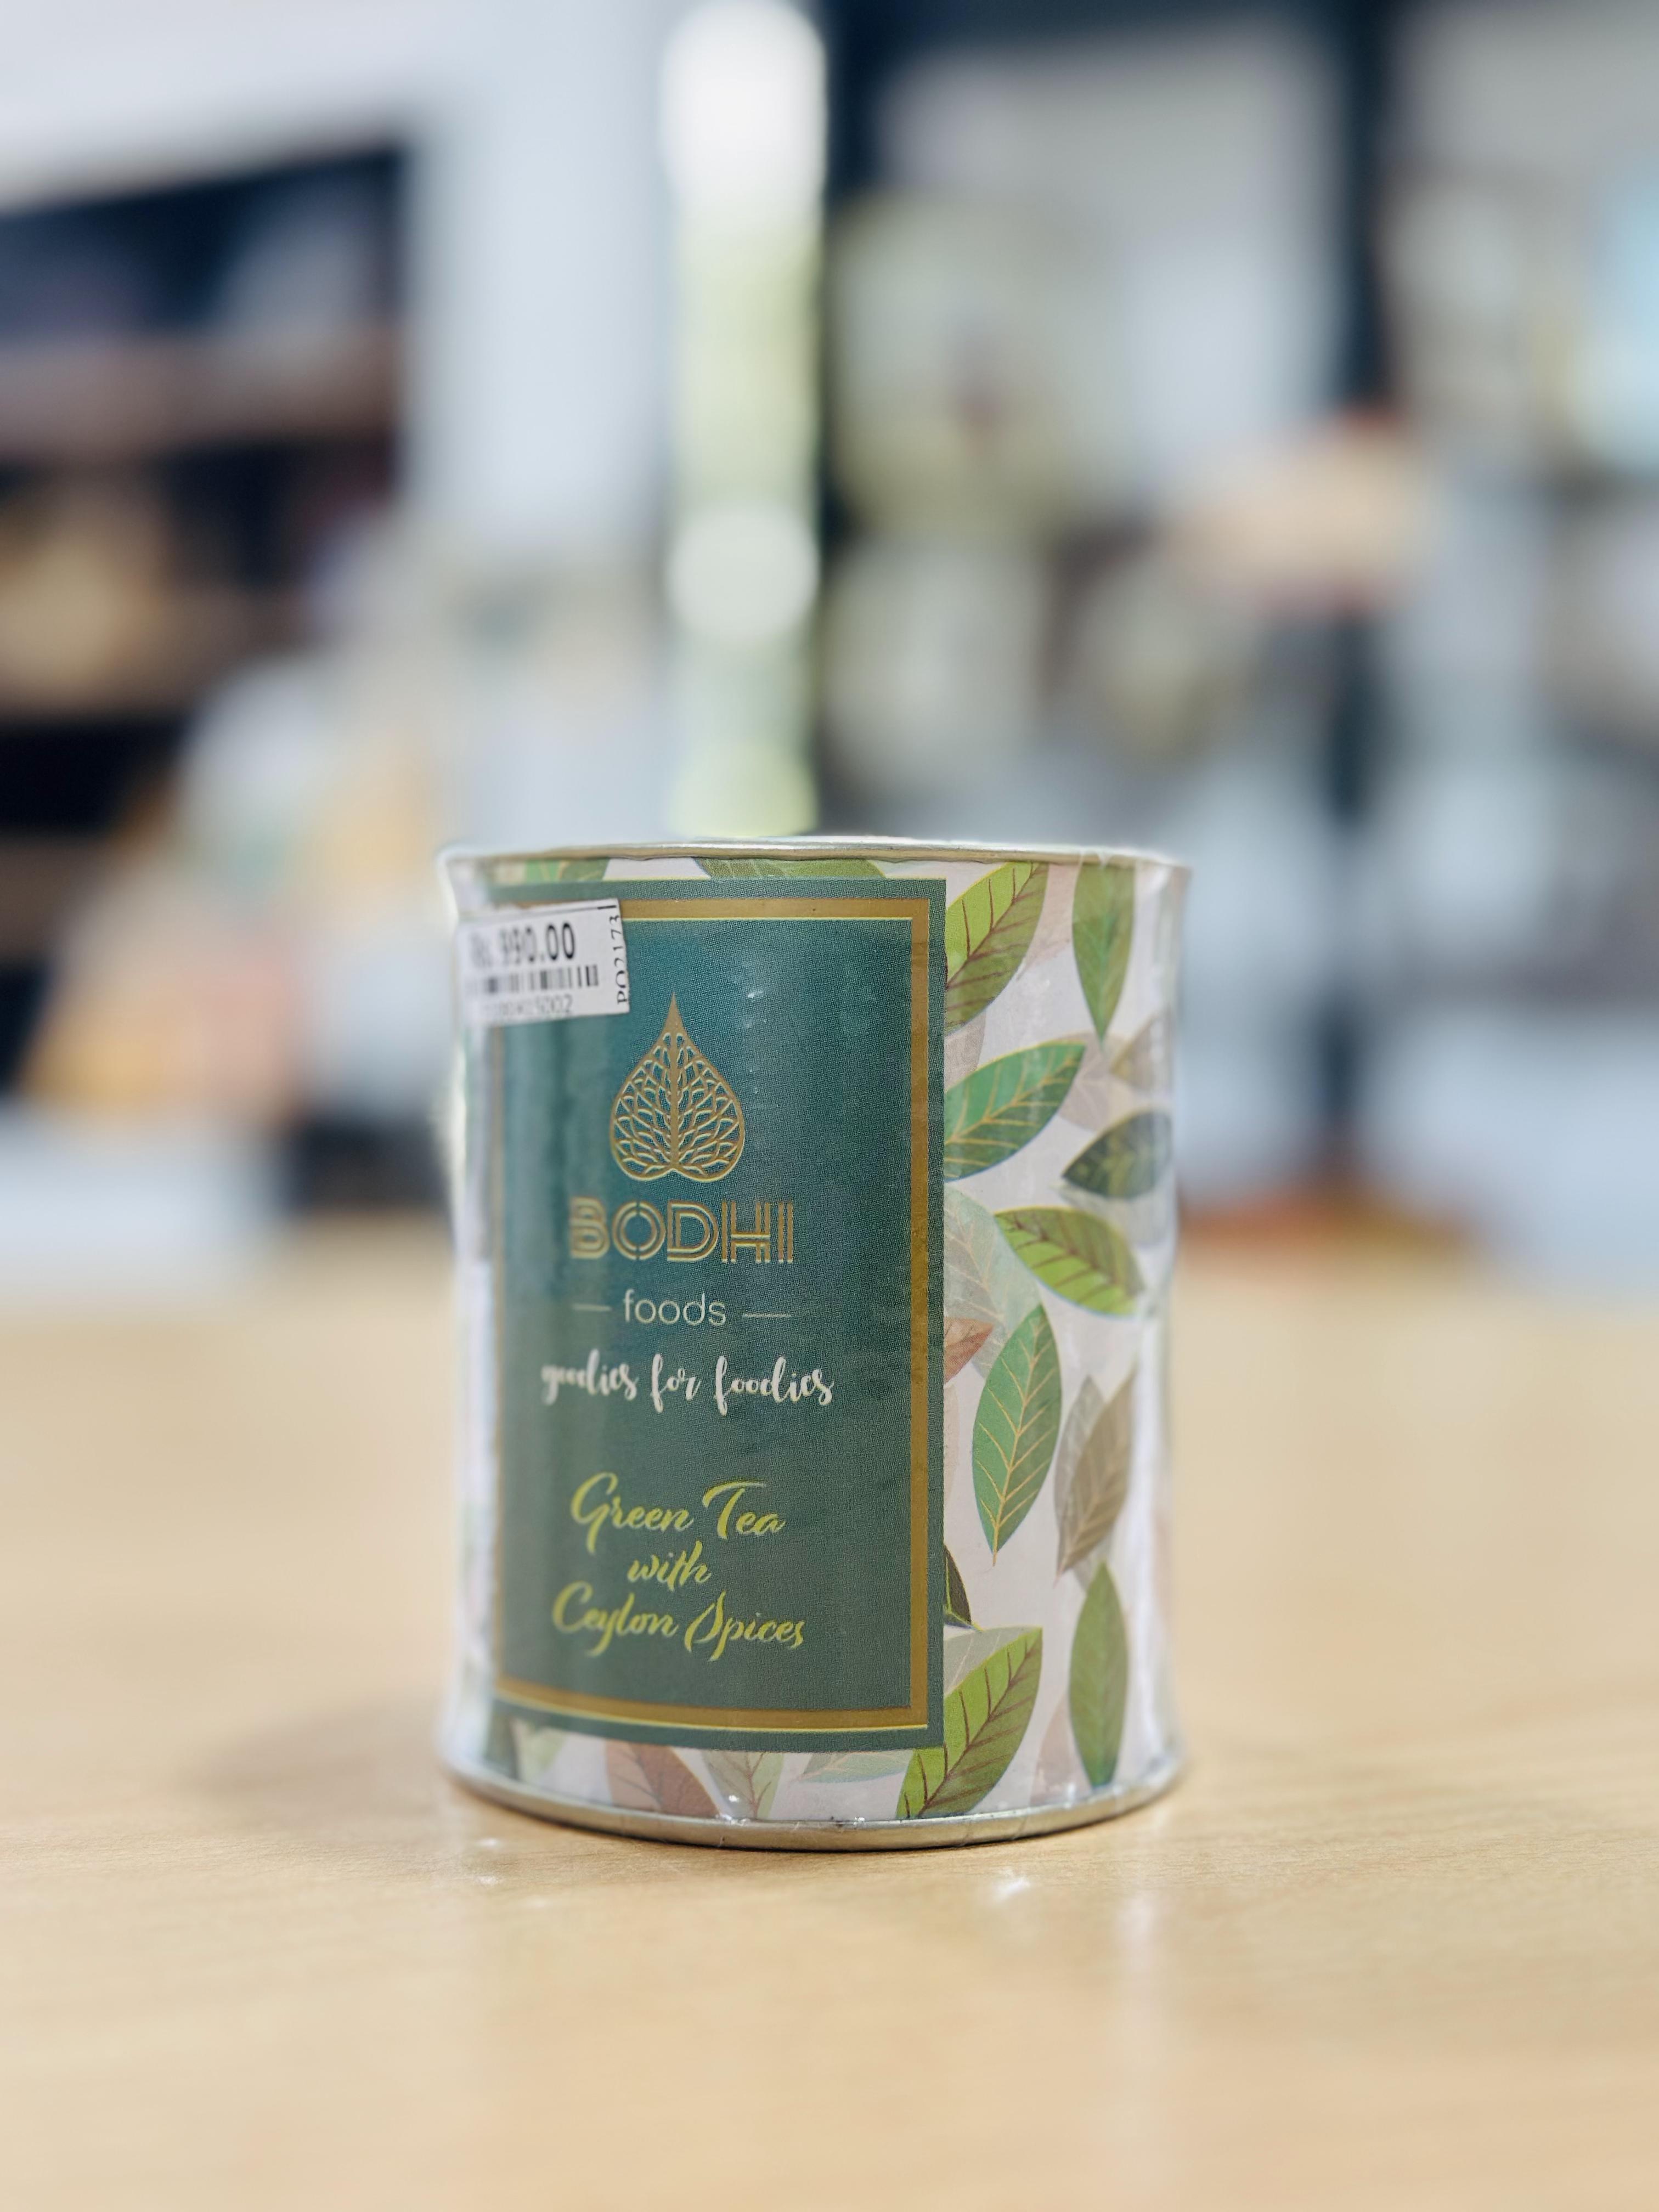 Ceylon Green Tea with Ceylon Spices